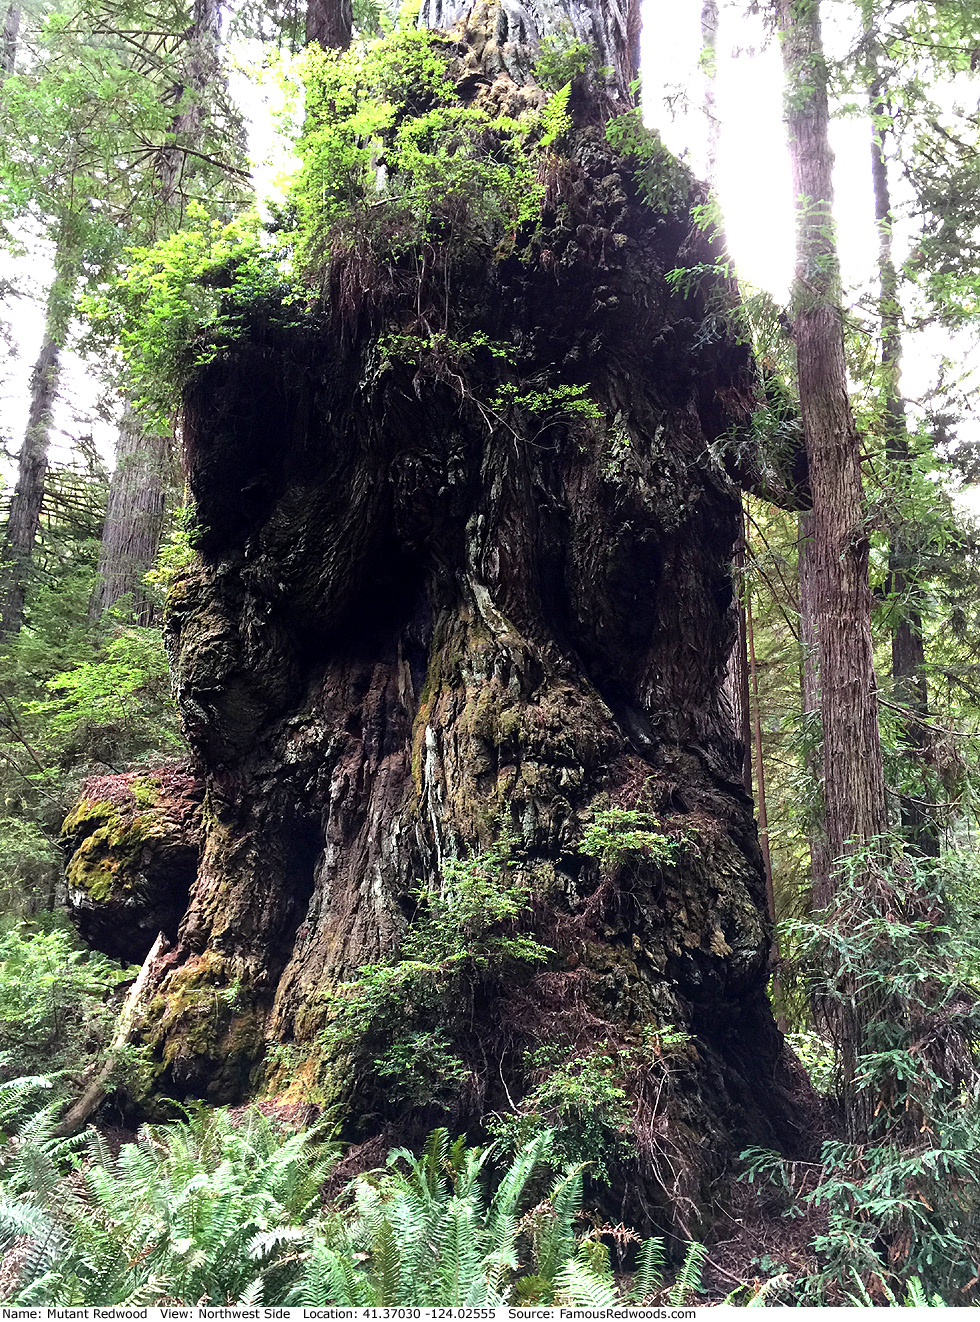 Mutant Redwood Tree